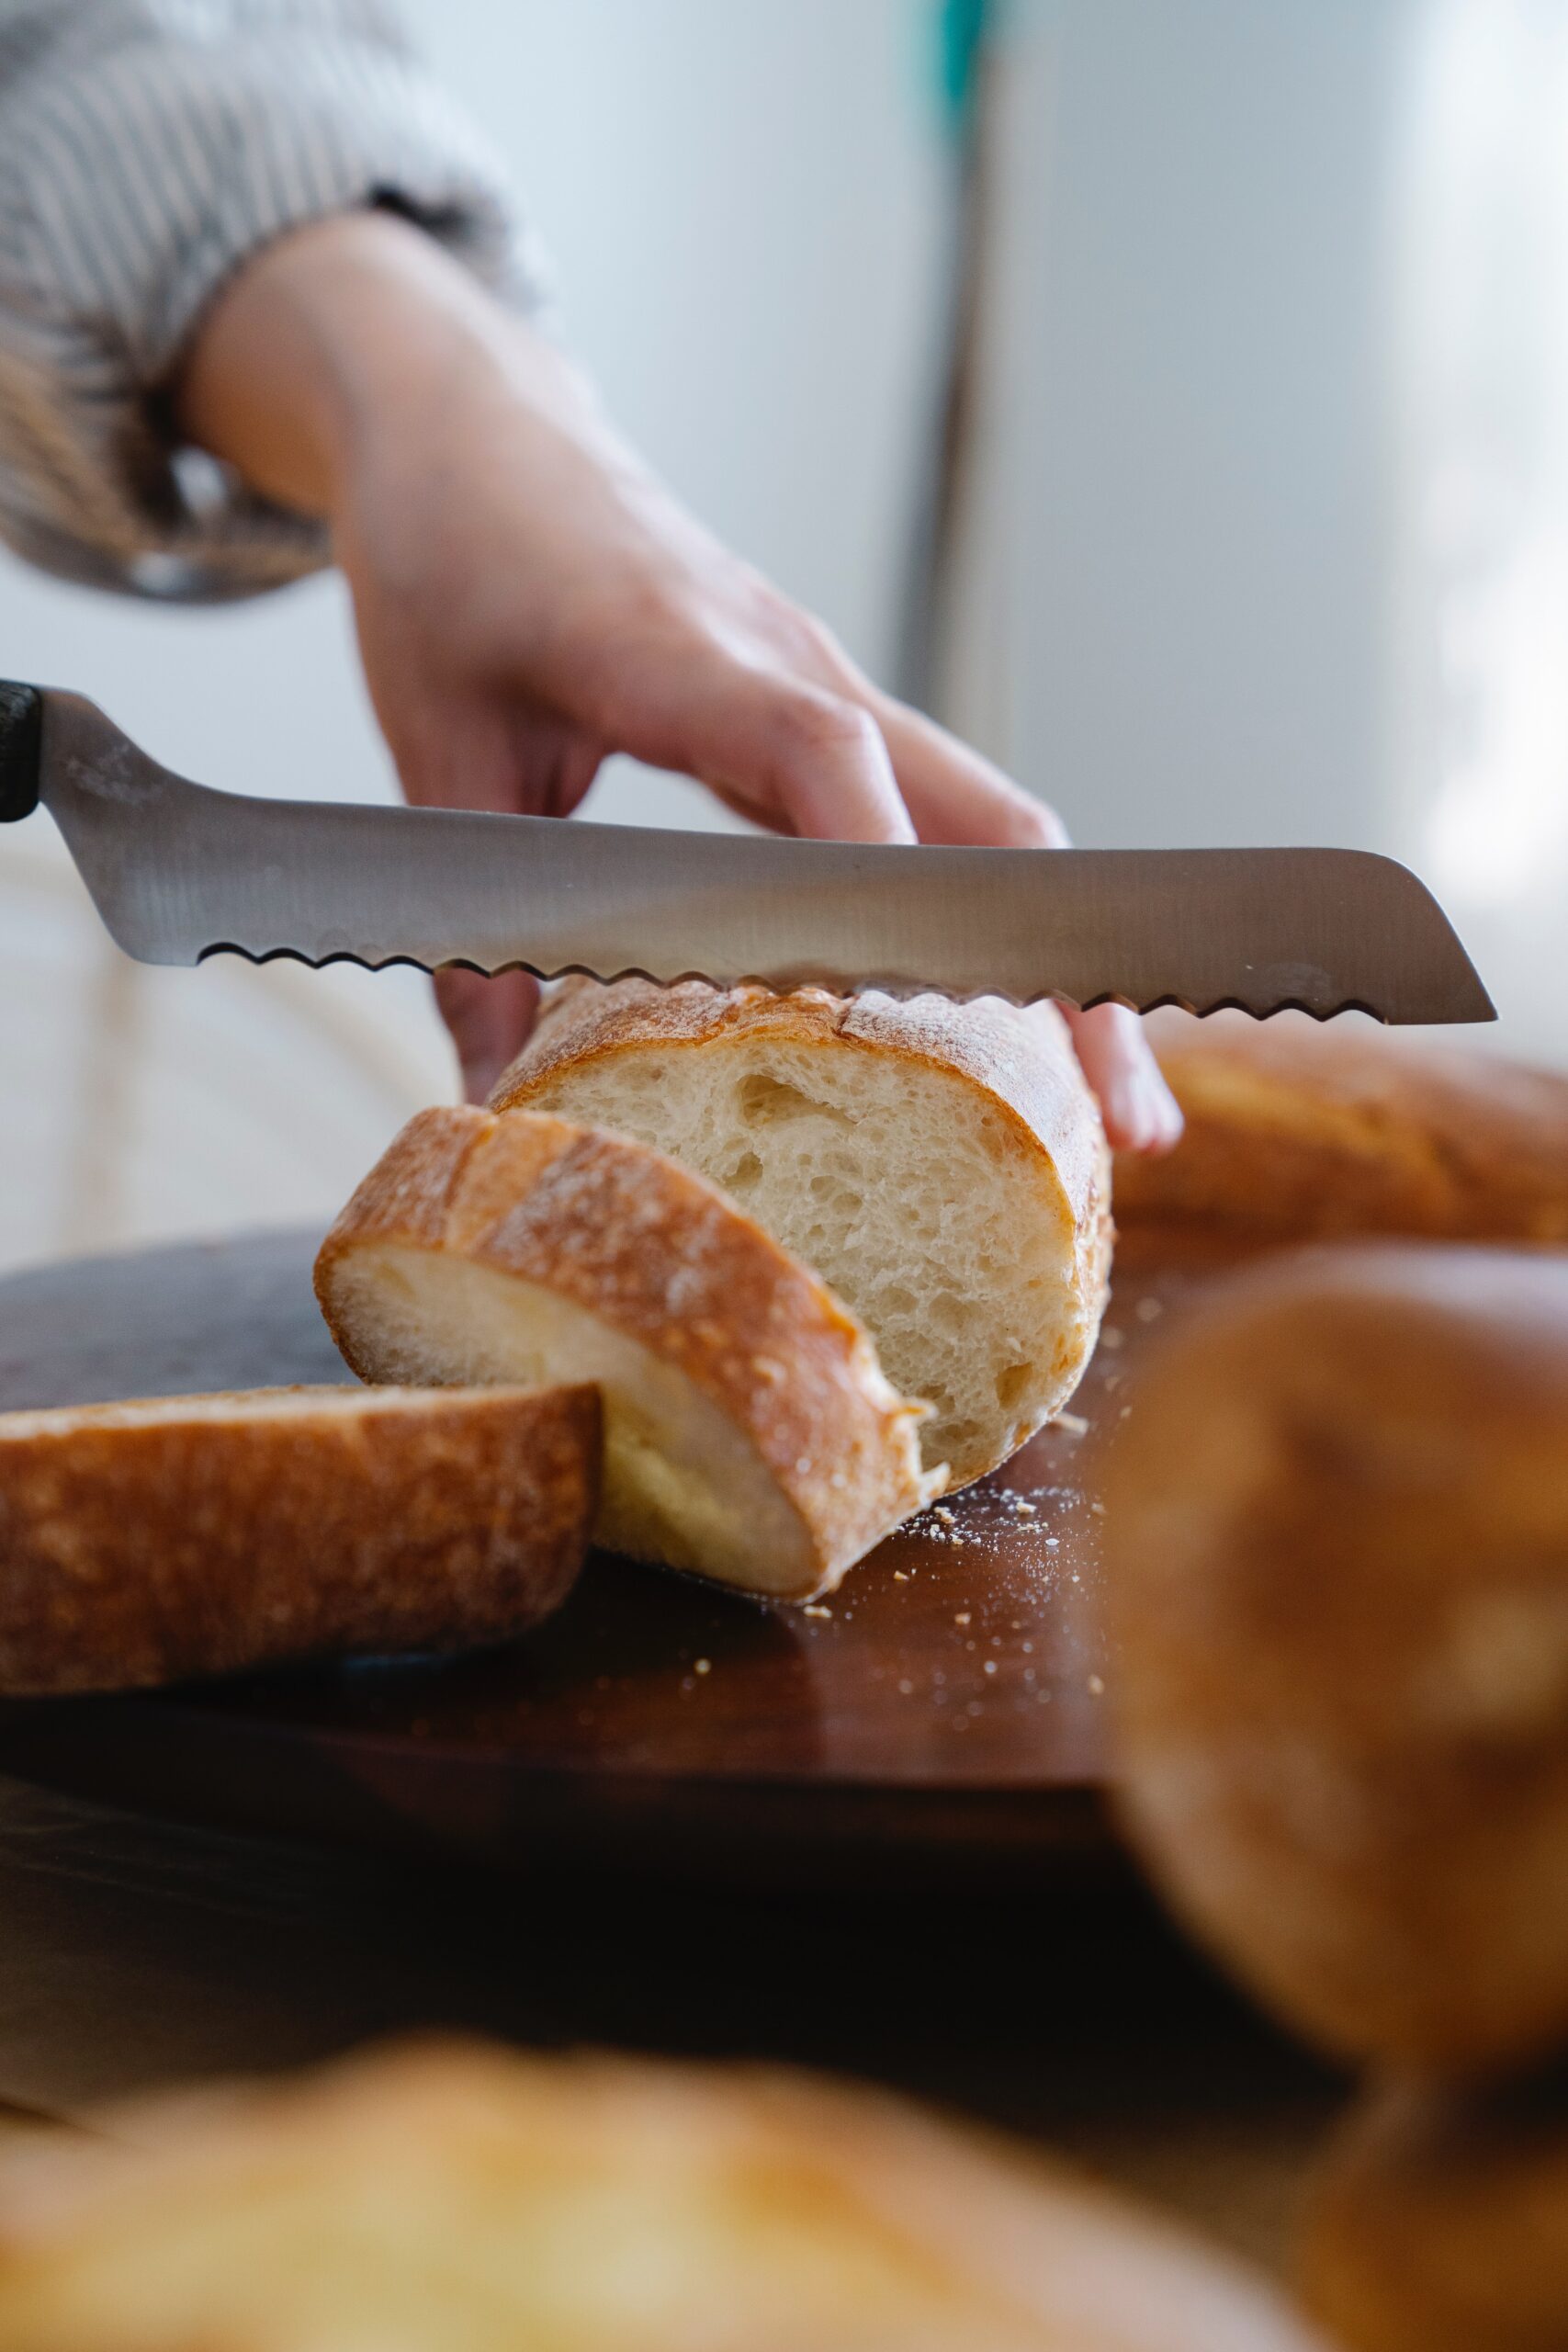 The Best Bread Knife Edge: Scalloped vs. Serrated